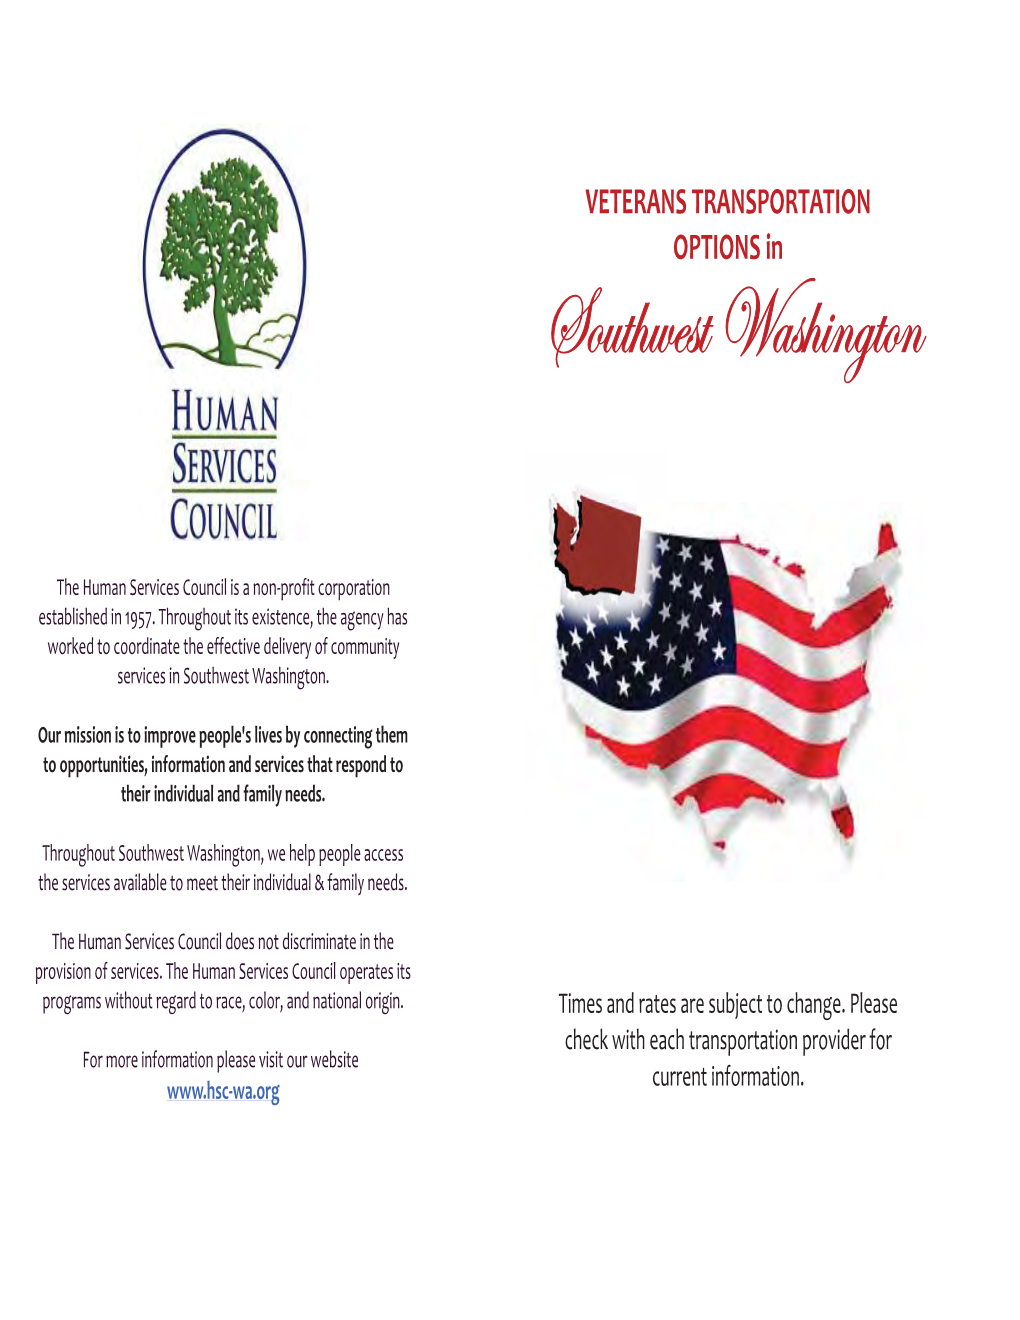 VETERANS TRANSPORTATION OPTIONS in Southwest Washington